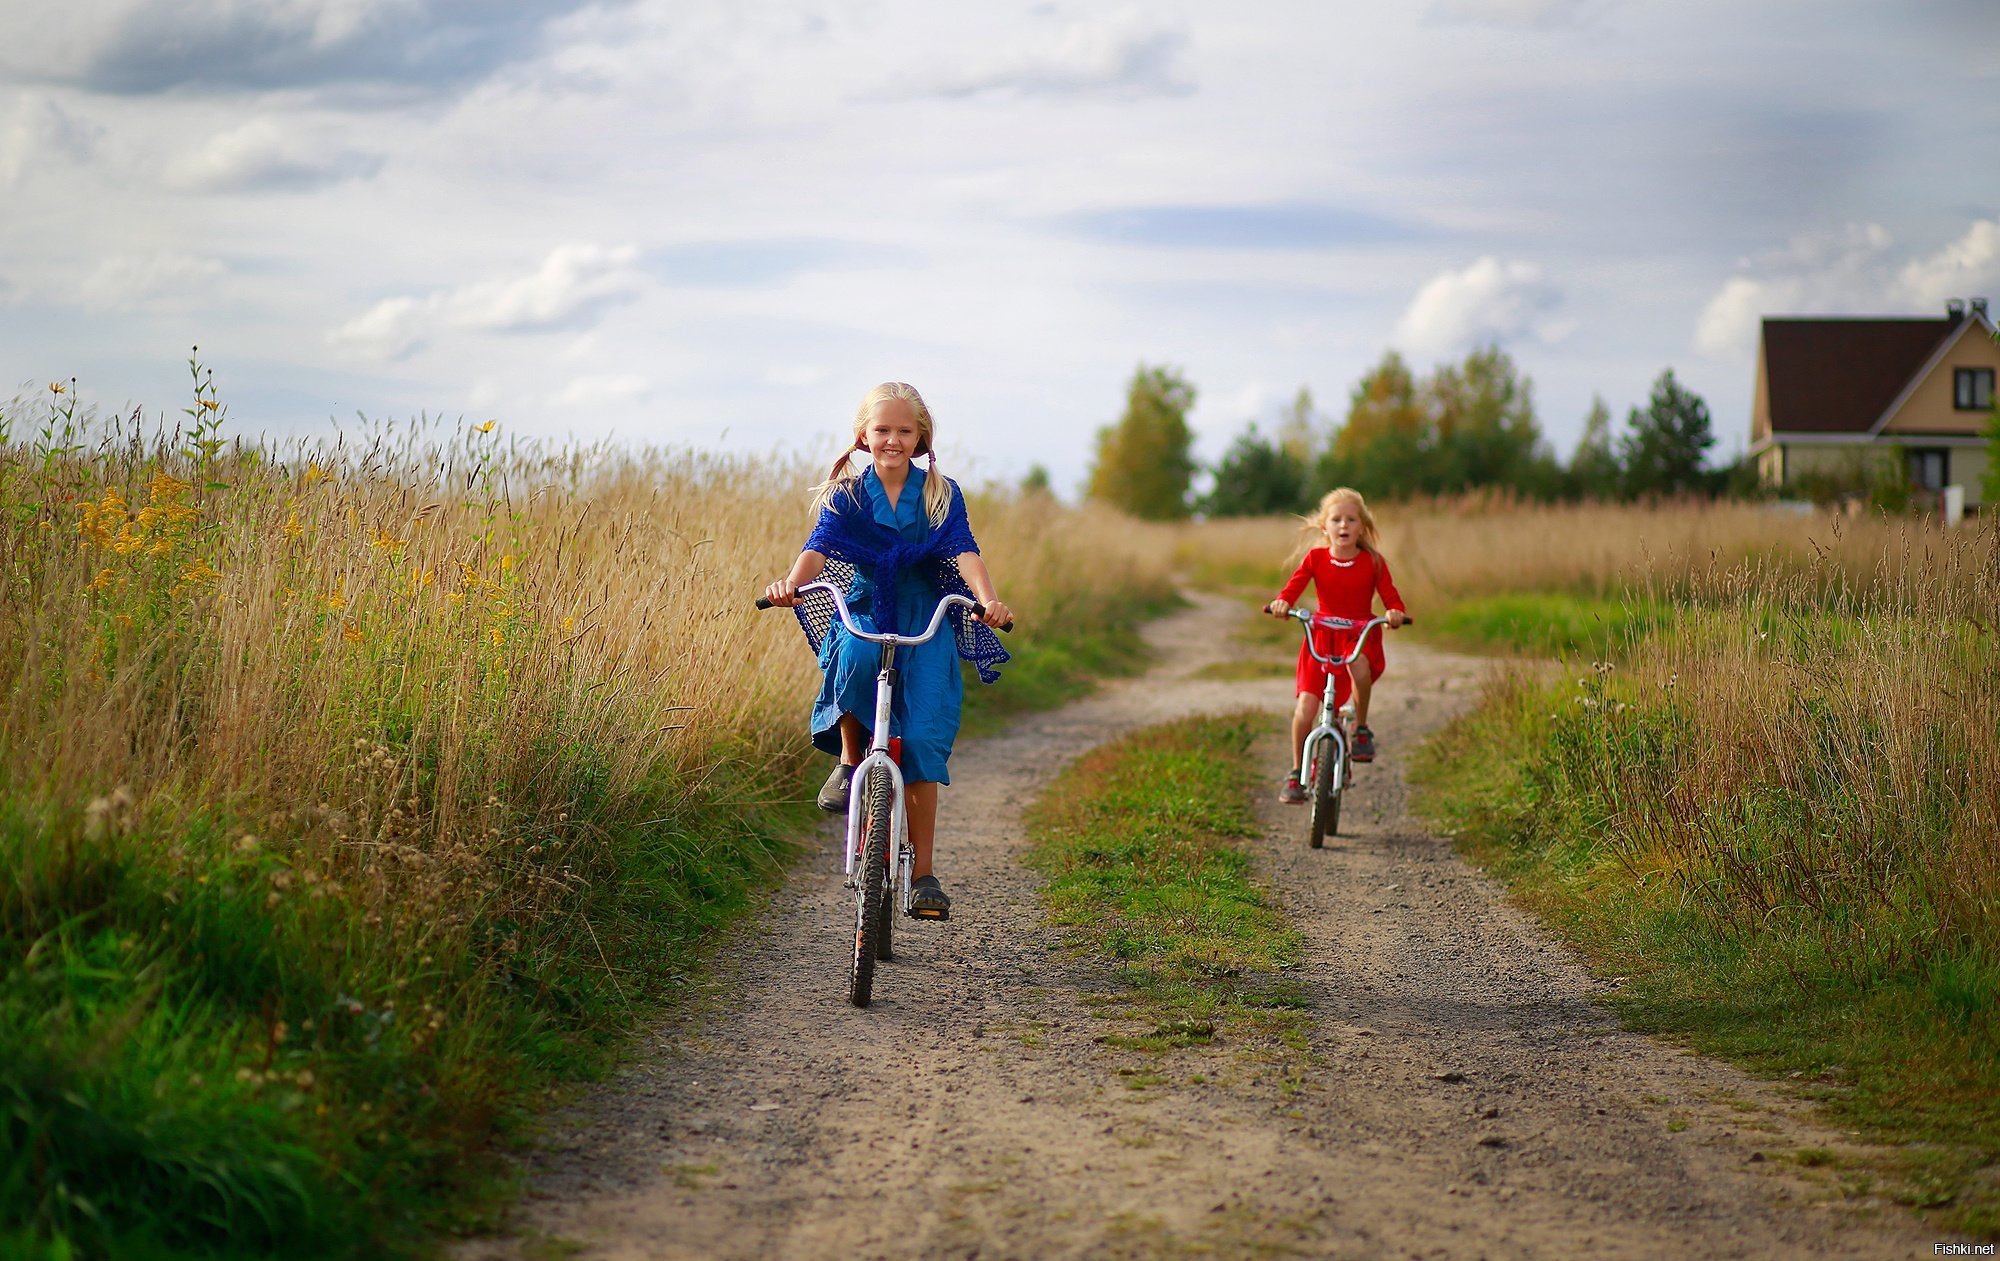 Велосипед для деревни. Дети на велосипедах в деревне. Мальчишки на велосипедах в деревне. Деревенские дети на велосипеде.